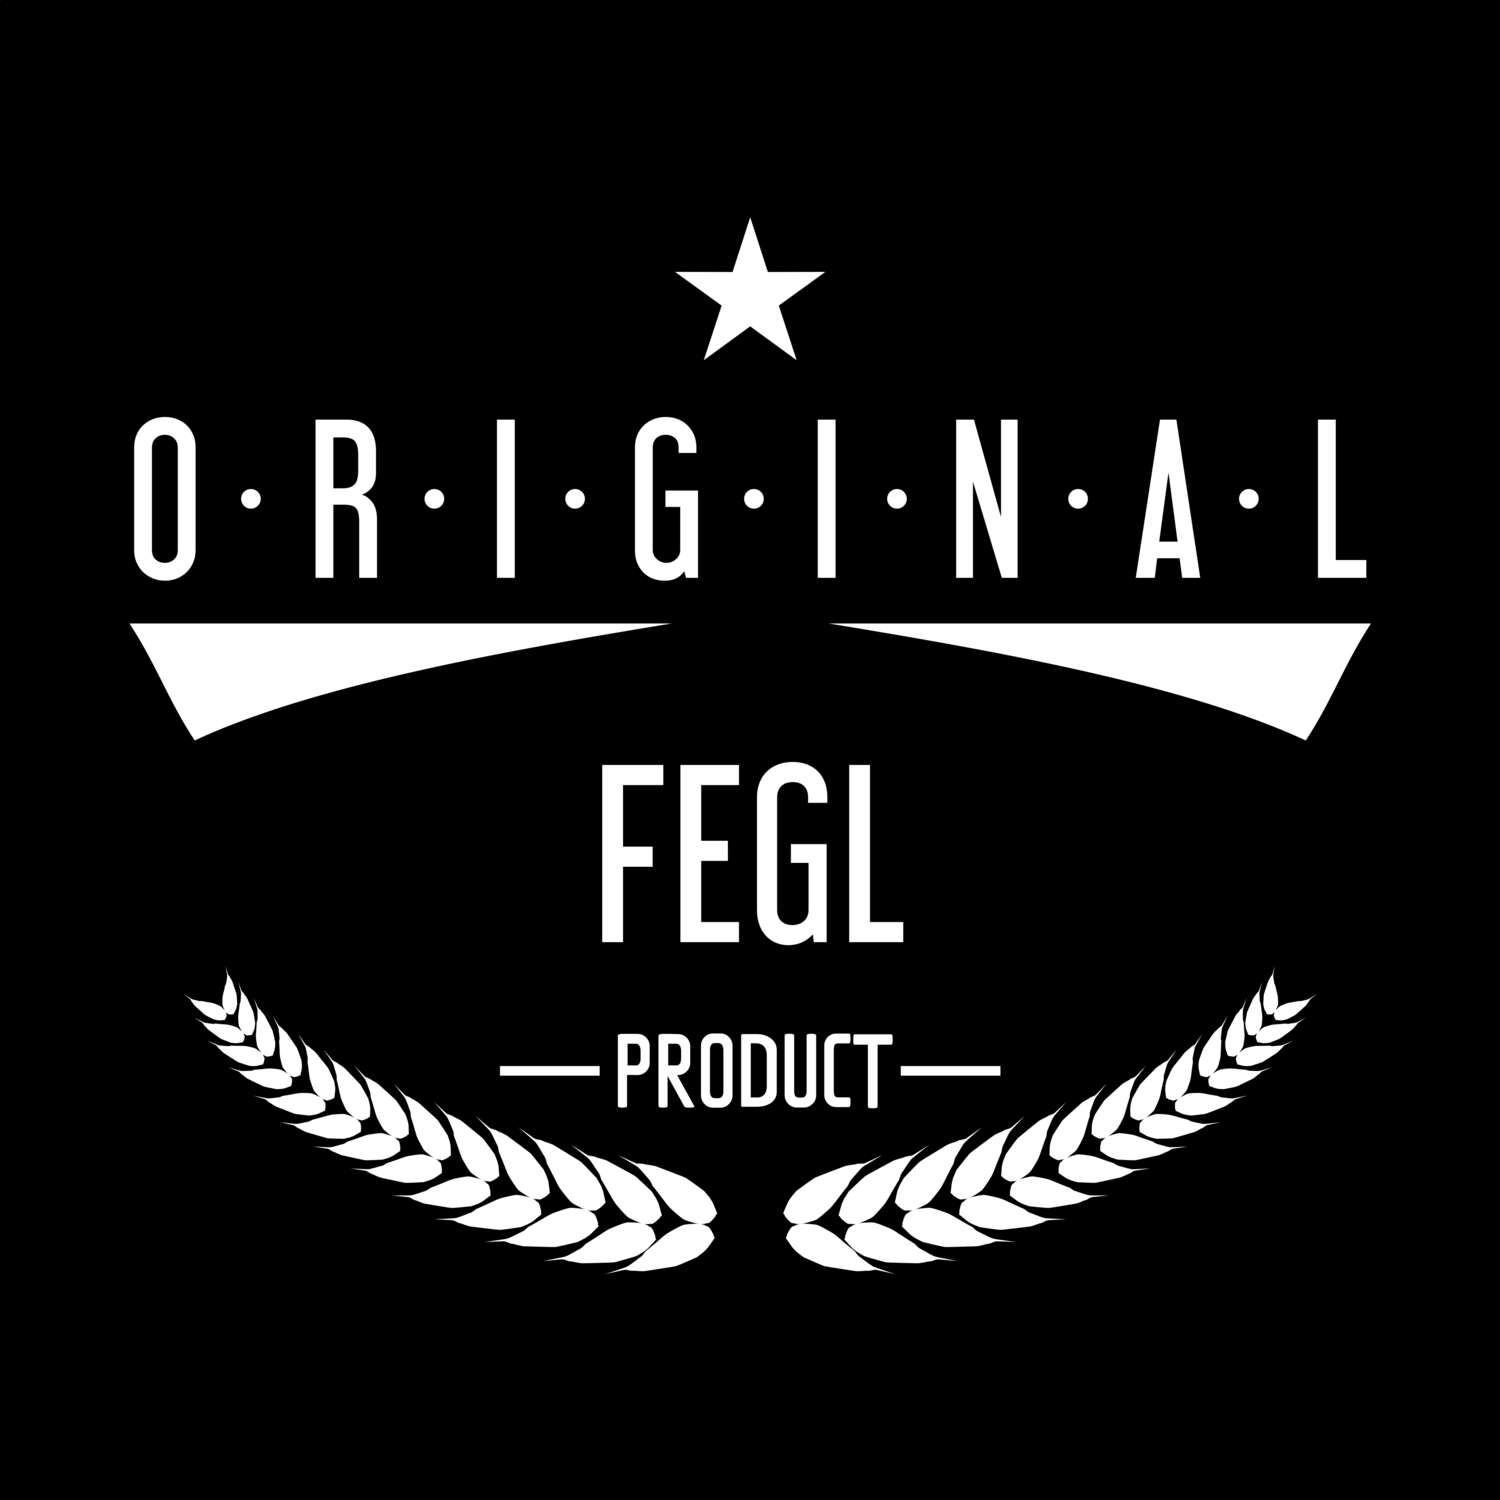 Fegl T-Shirt »Original Product«